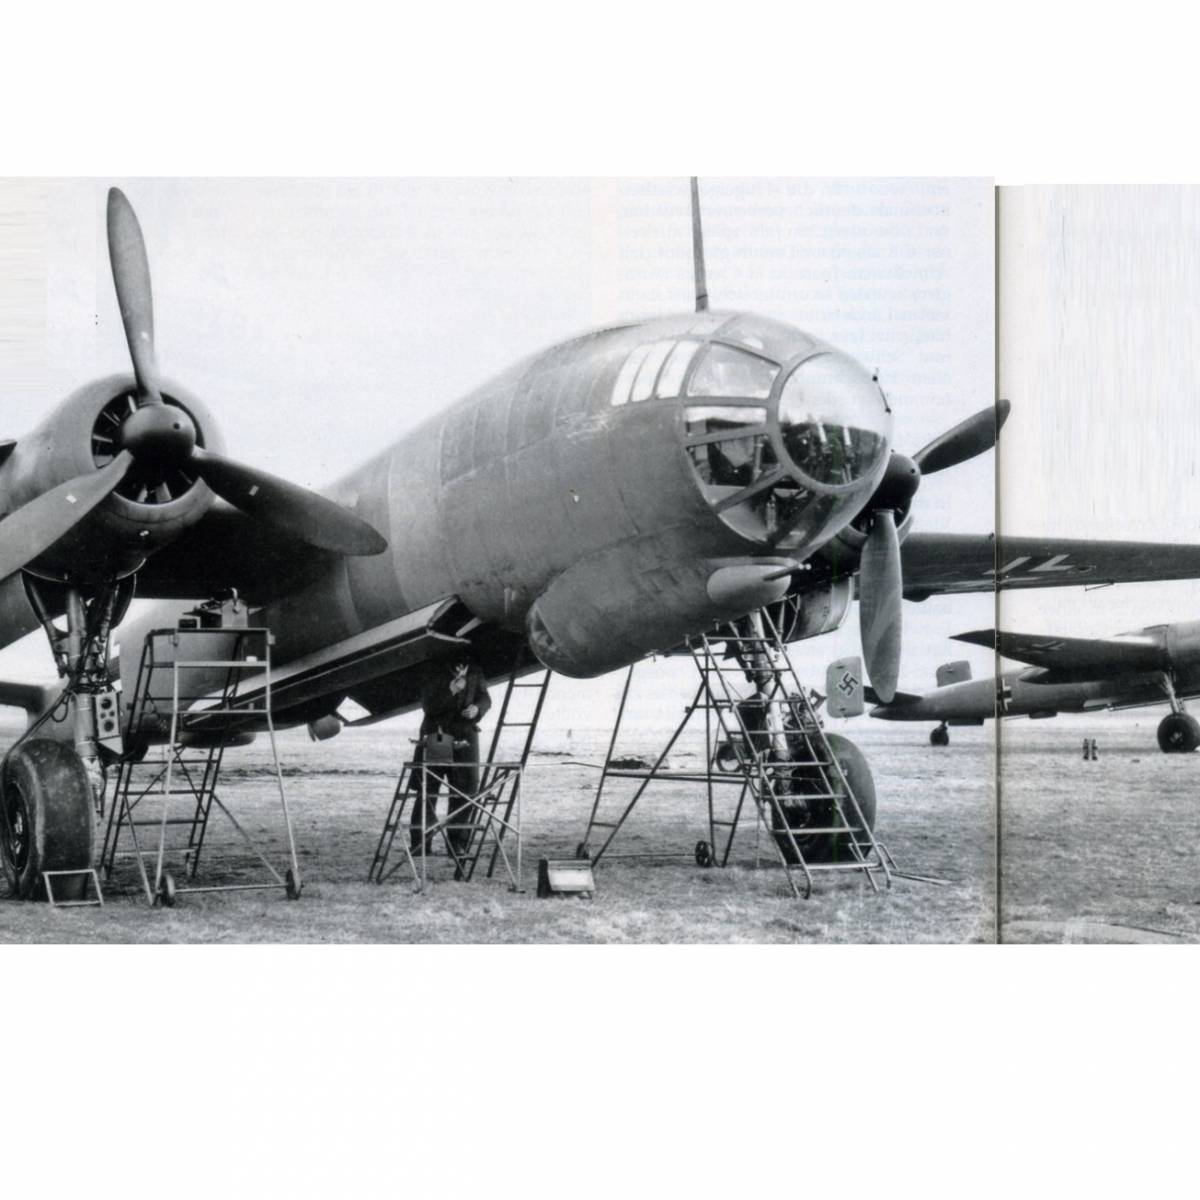 Скоростной бомбардировщик Focke-Wulf Fw 191. Германия